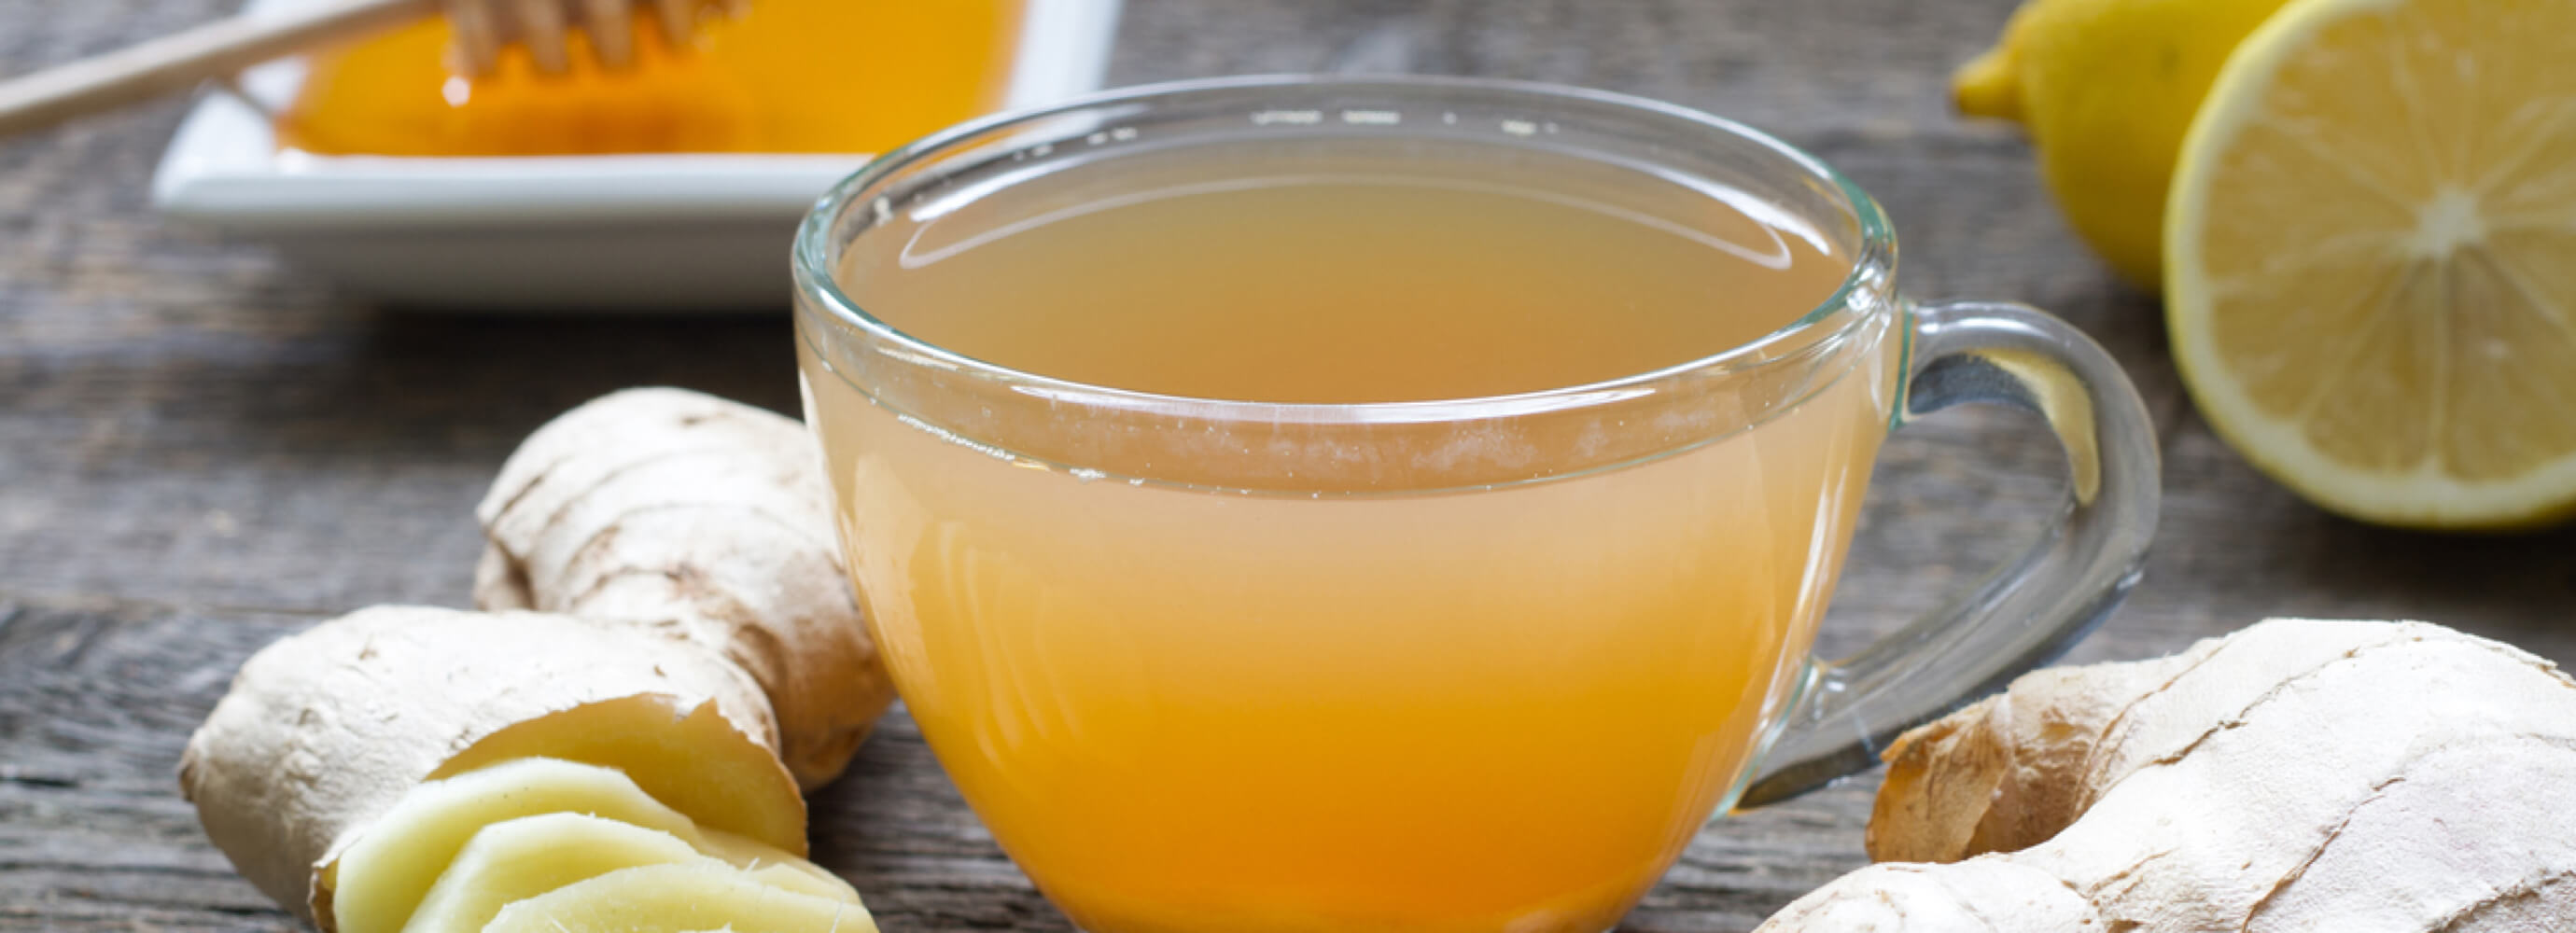 Tees und Kräuter gegen Erkältung - Tempo